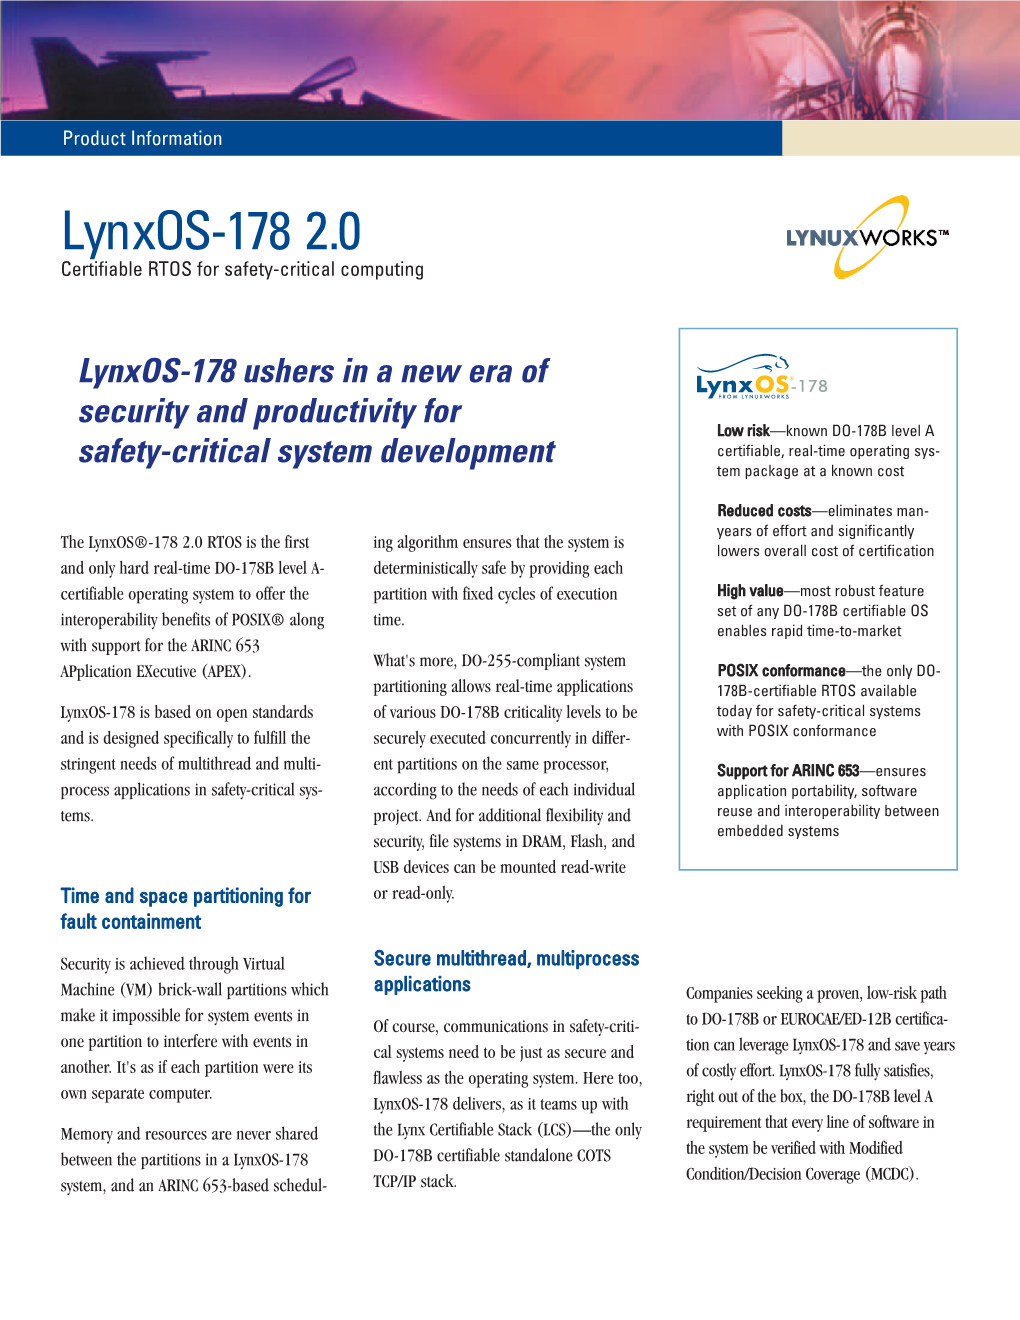 Lynxos-178 2.0 Certifiable RTOS for Safety-Critical Computing